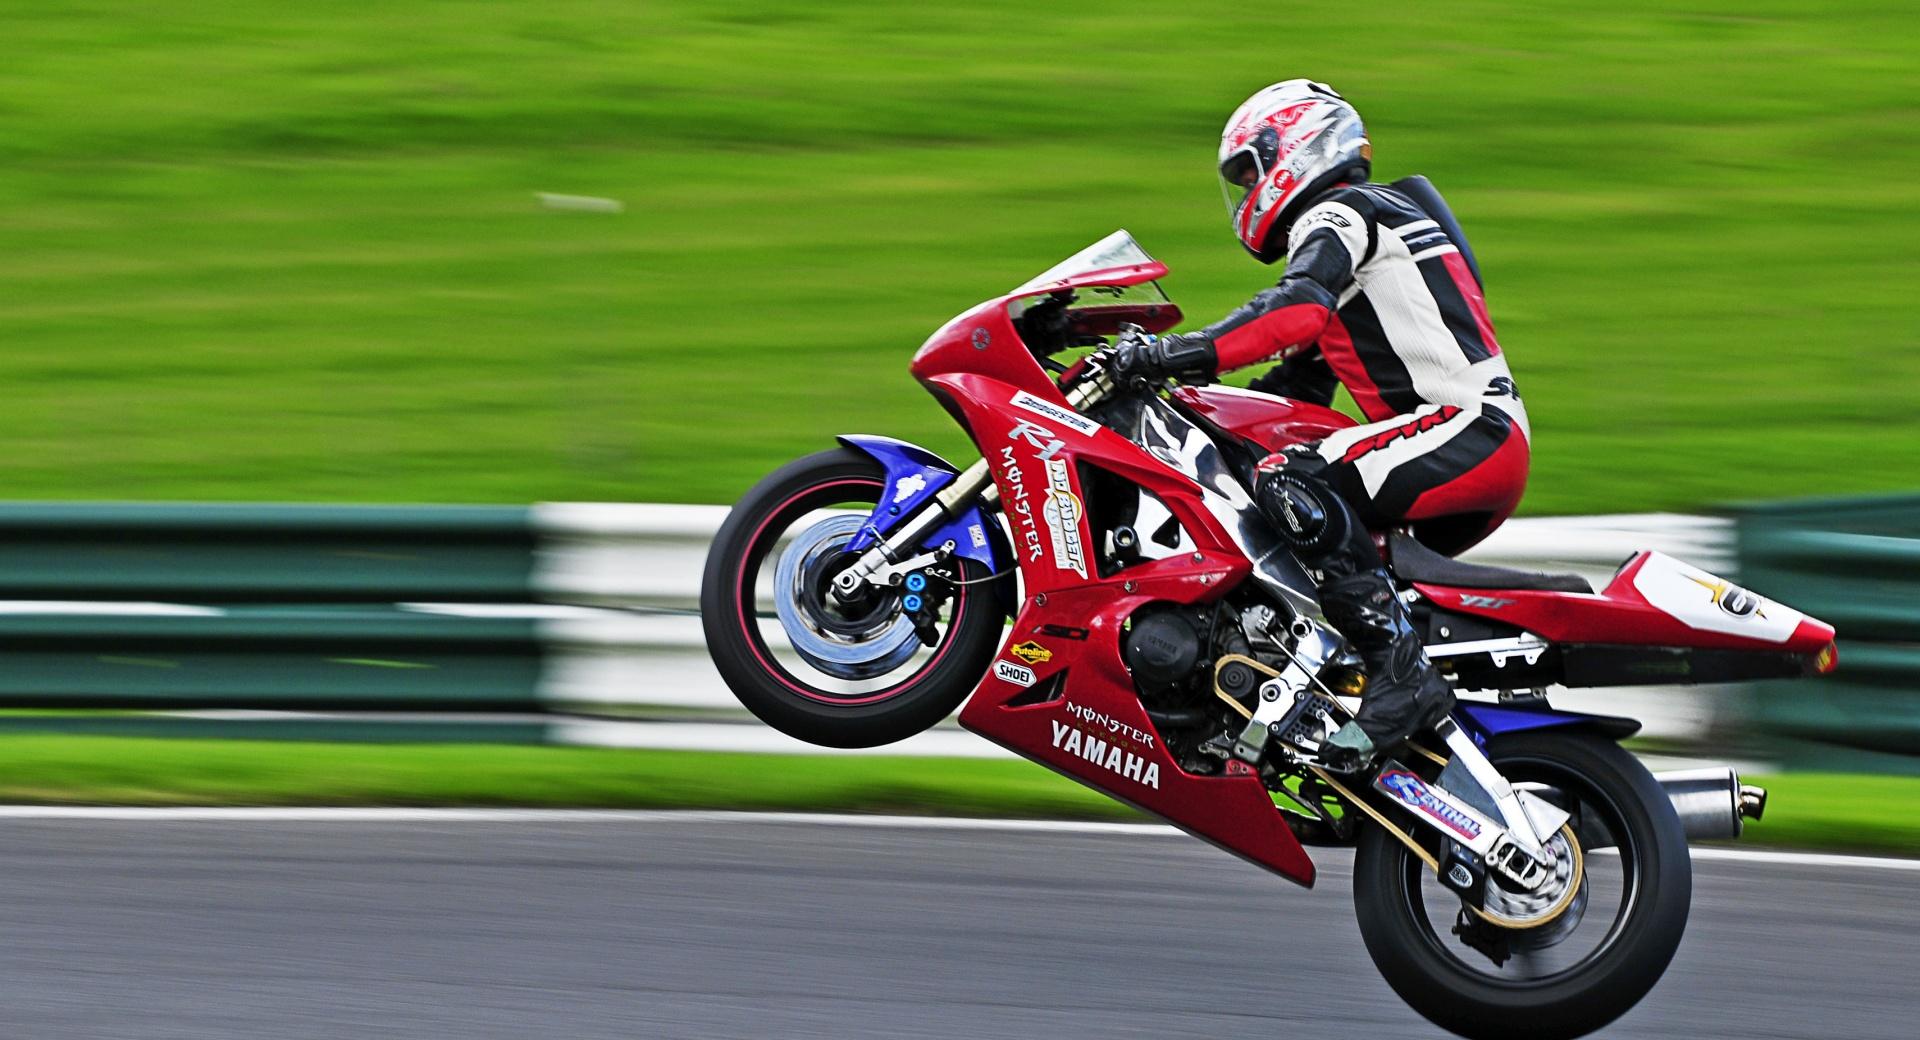 Yamaha Race Motorcycle wallpapers HD quality